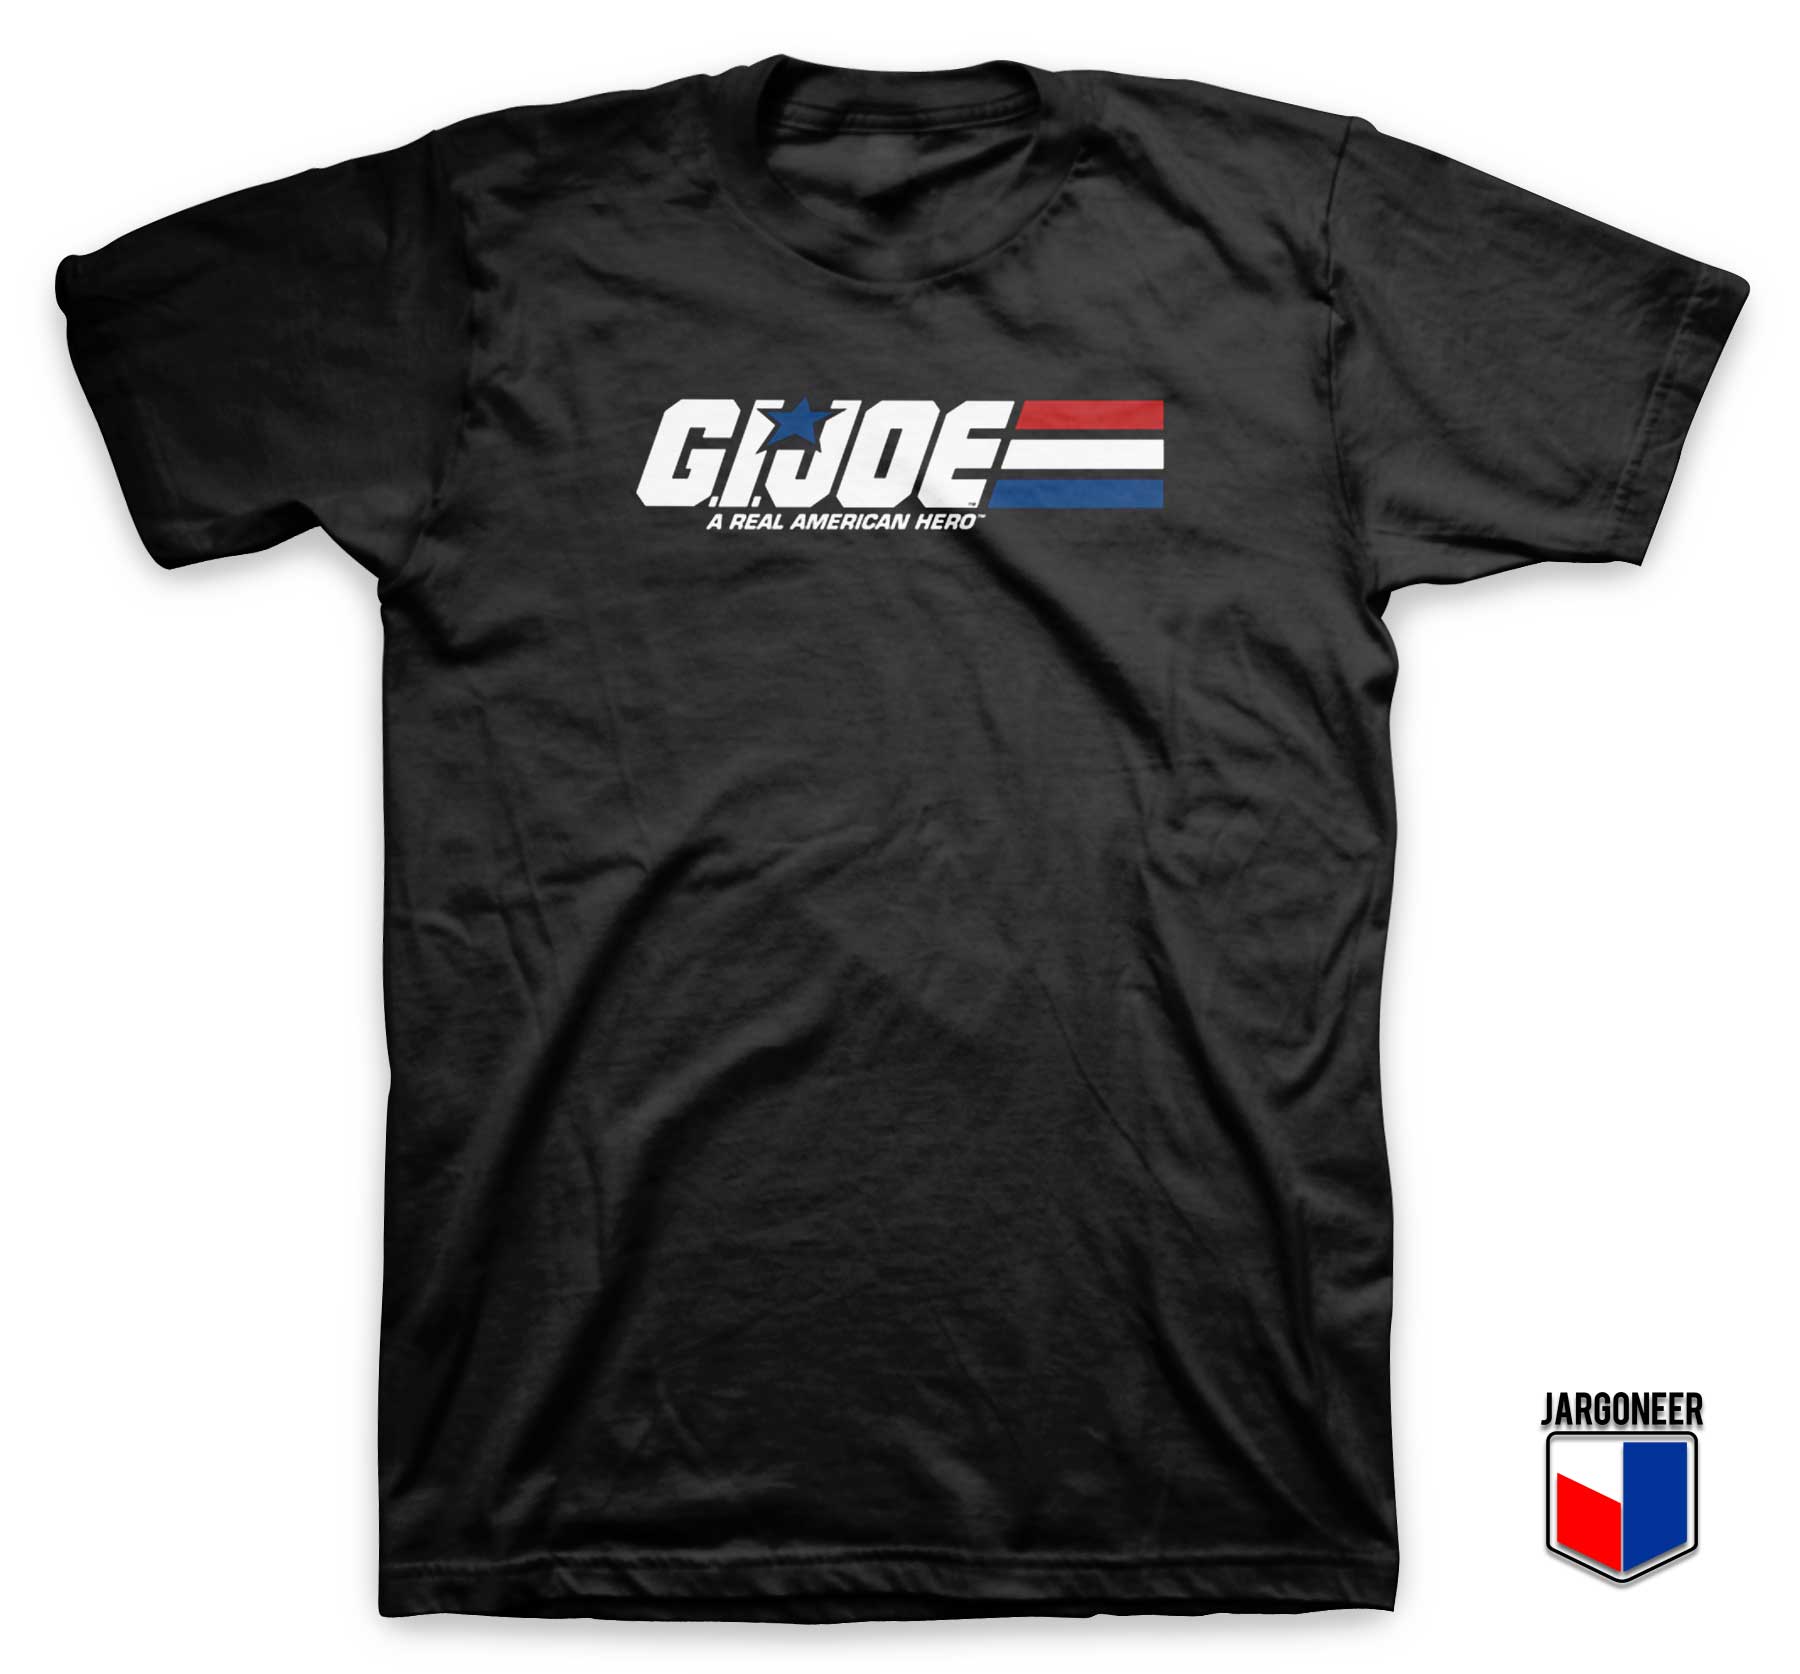 GI Joe Real American Heroes T Shirt - Shop Unique Graphic Cool Shirt Designs